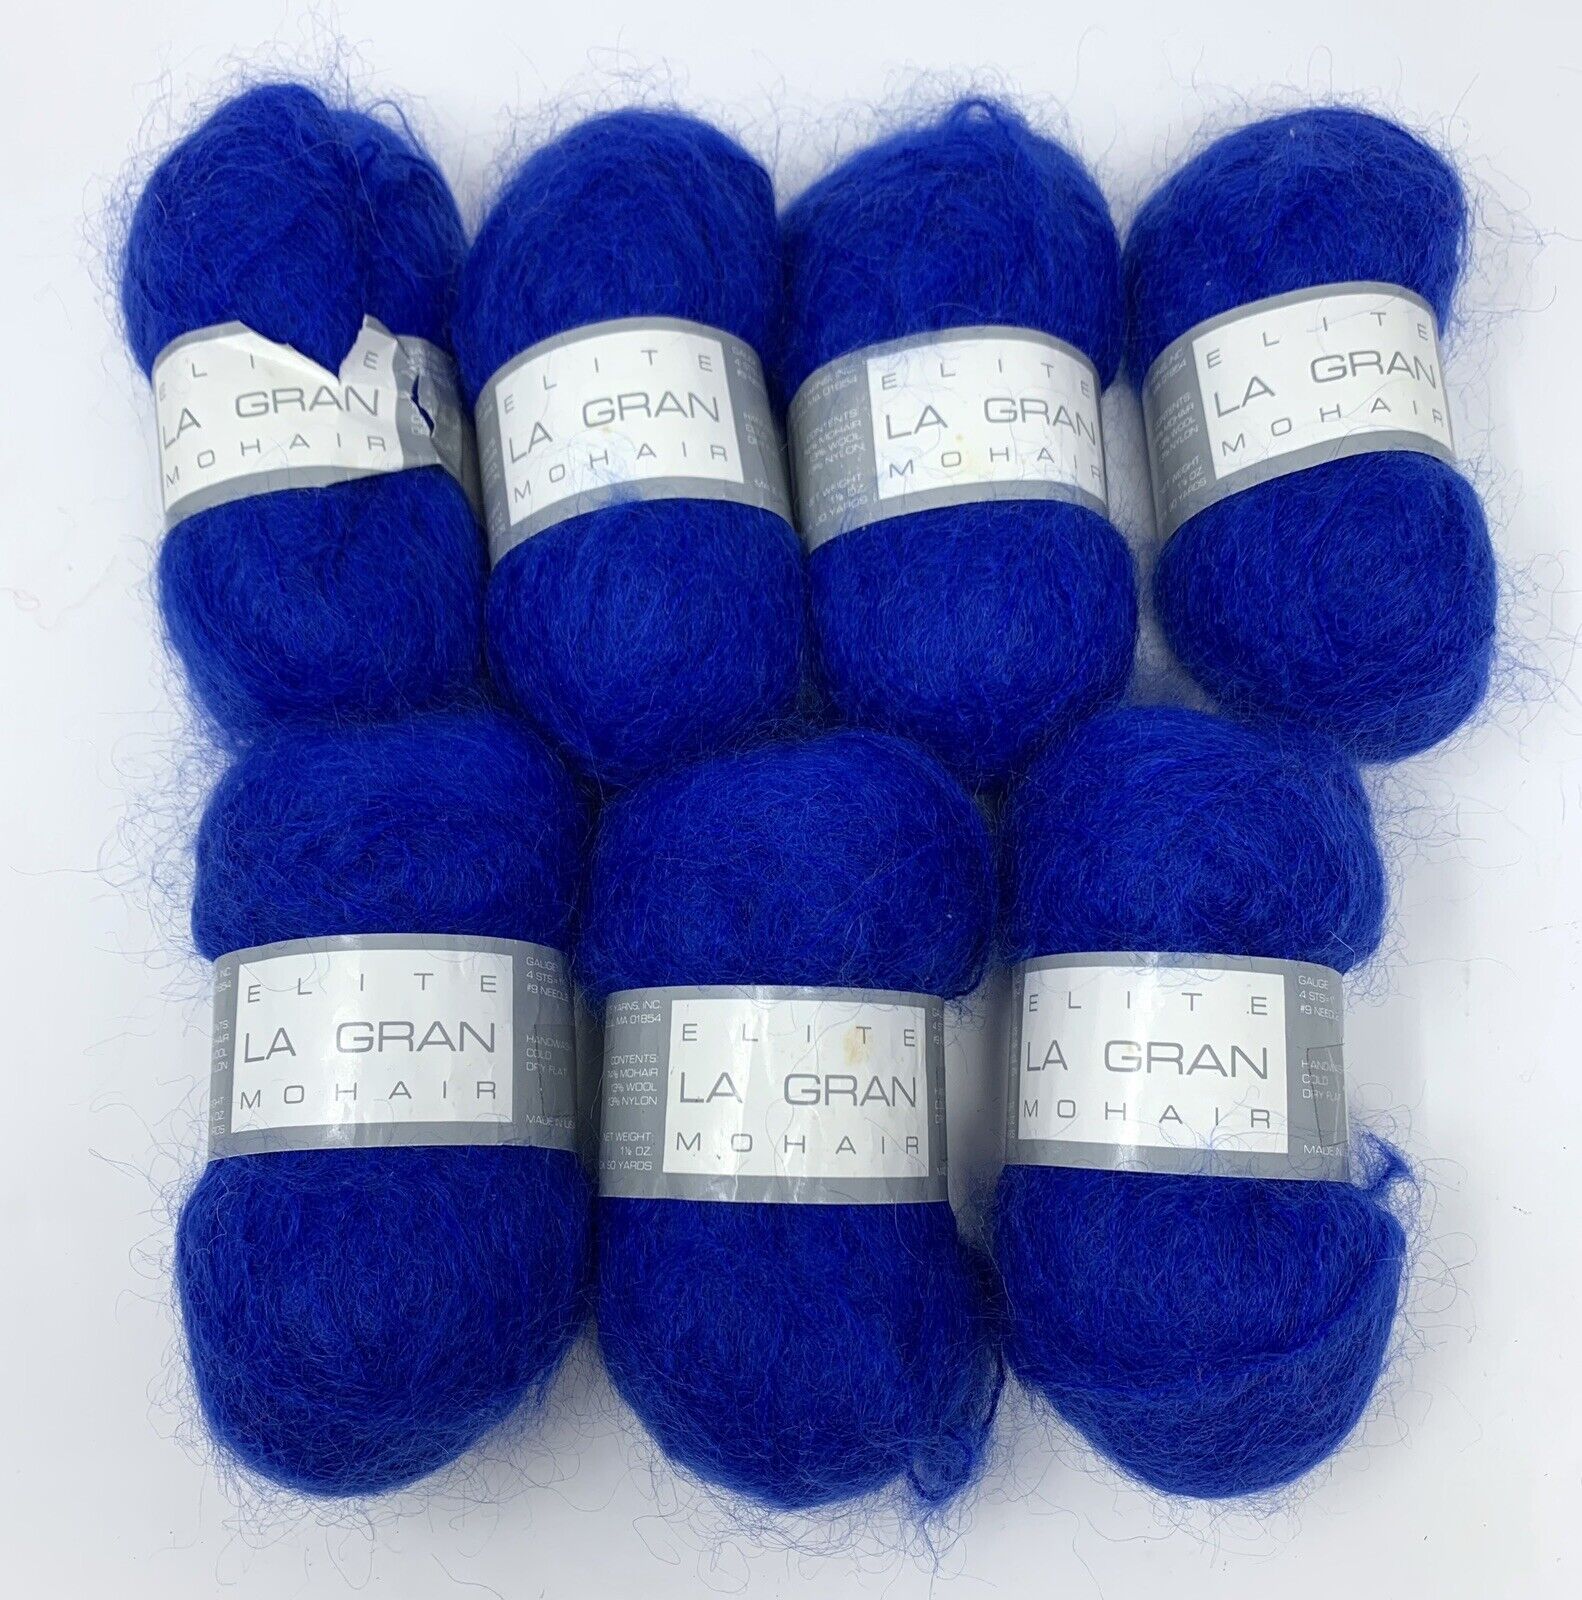 Lot of 7 Skeins Elite La Gran 74% Mohair Yarn in Royal Blue Vintage Same Lot